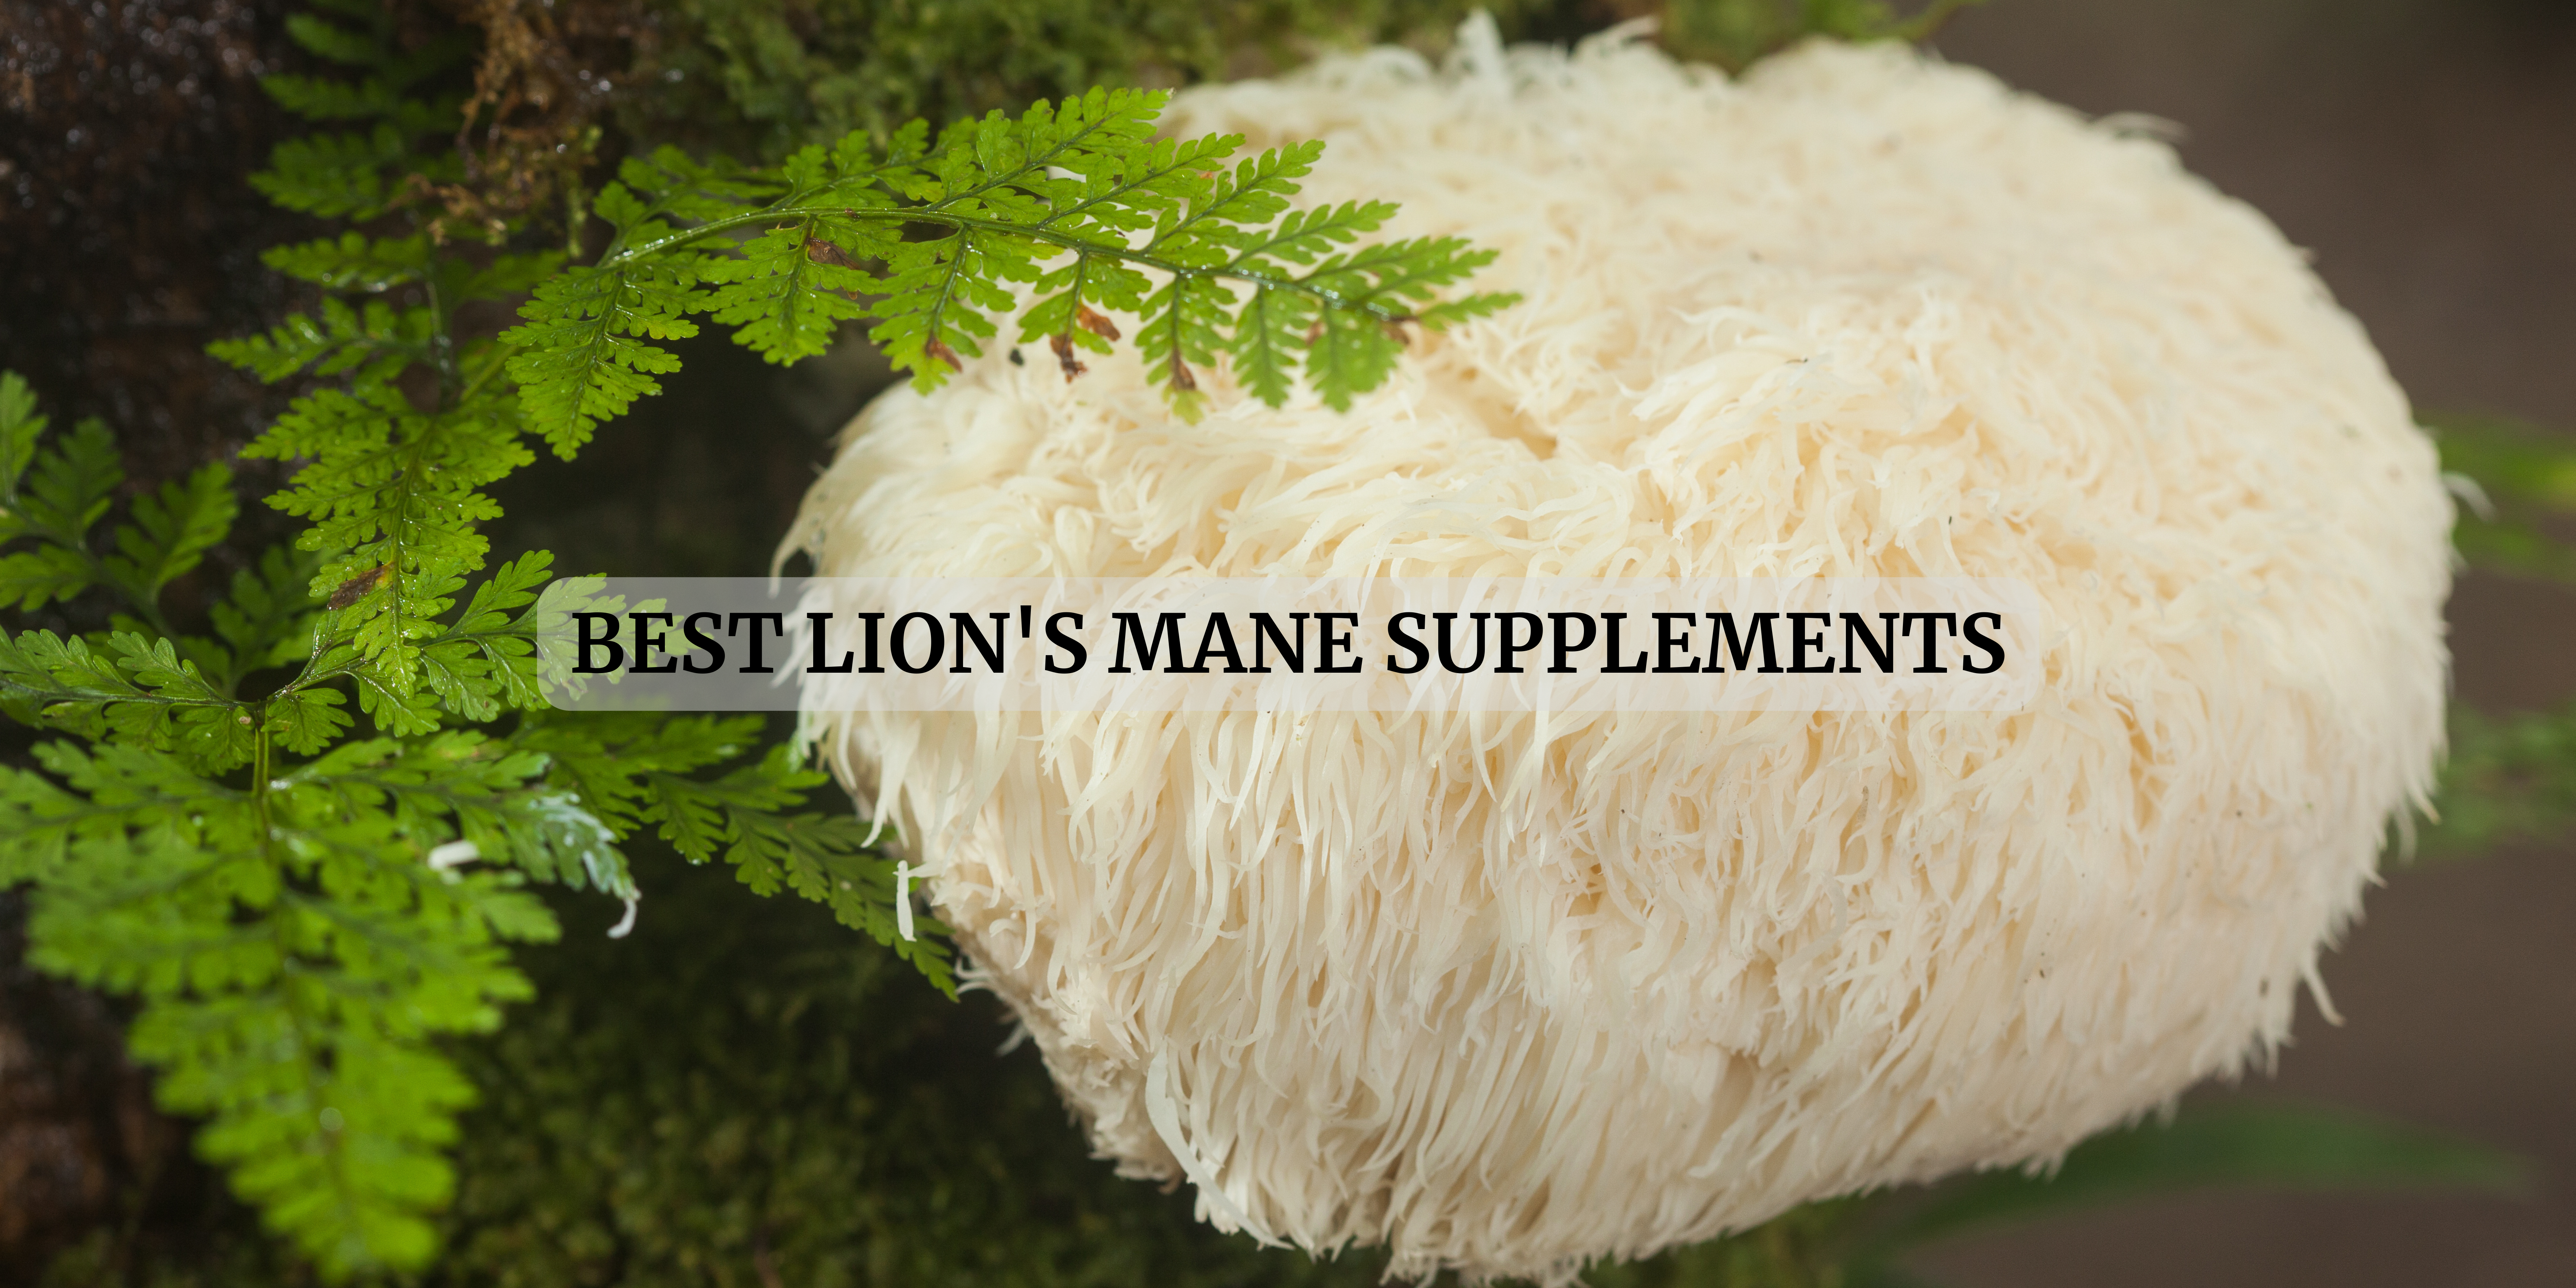 lion's mane supplements in Spain